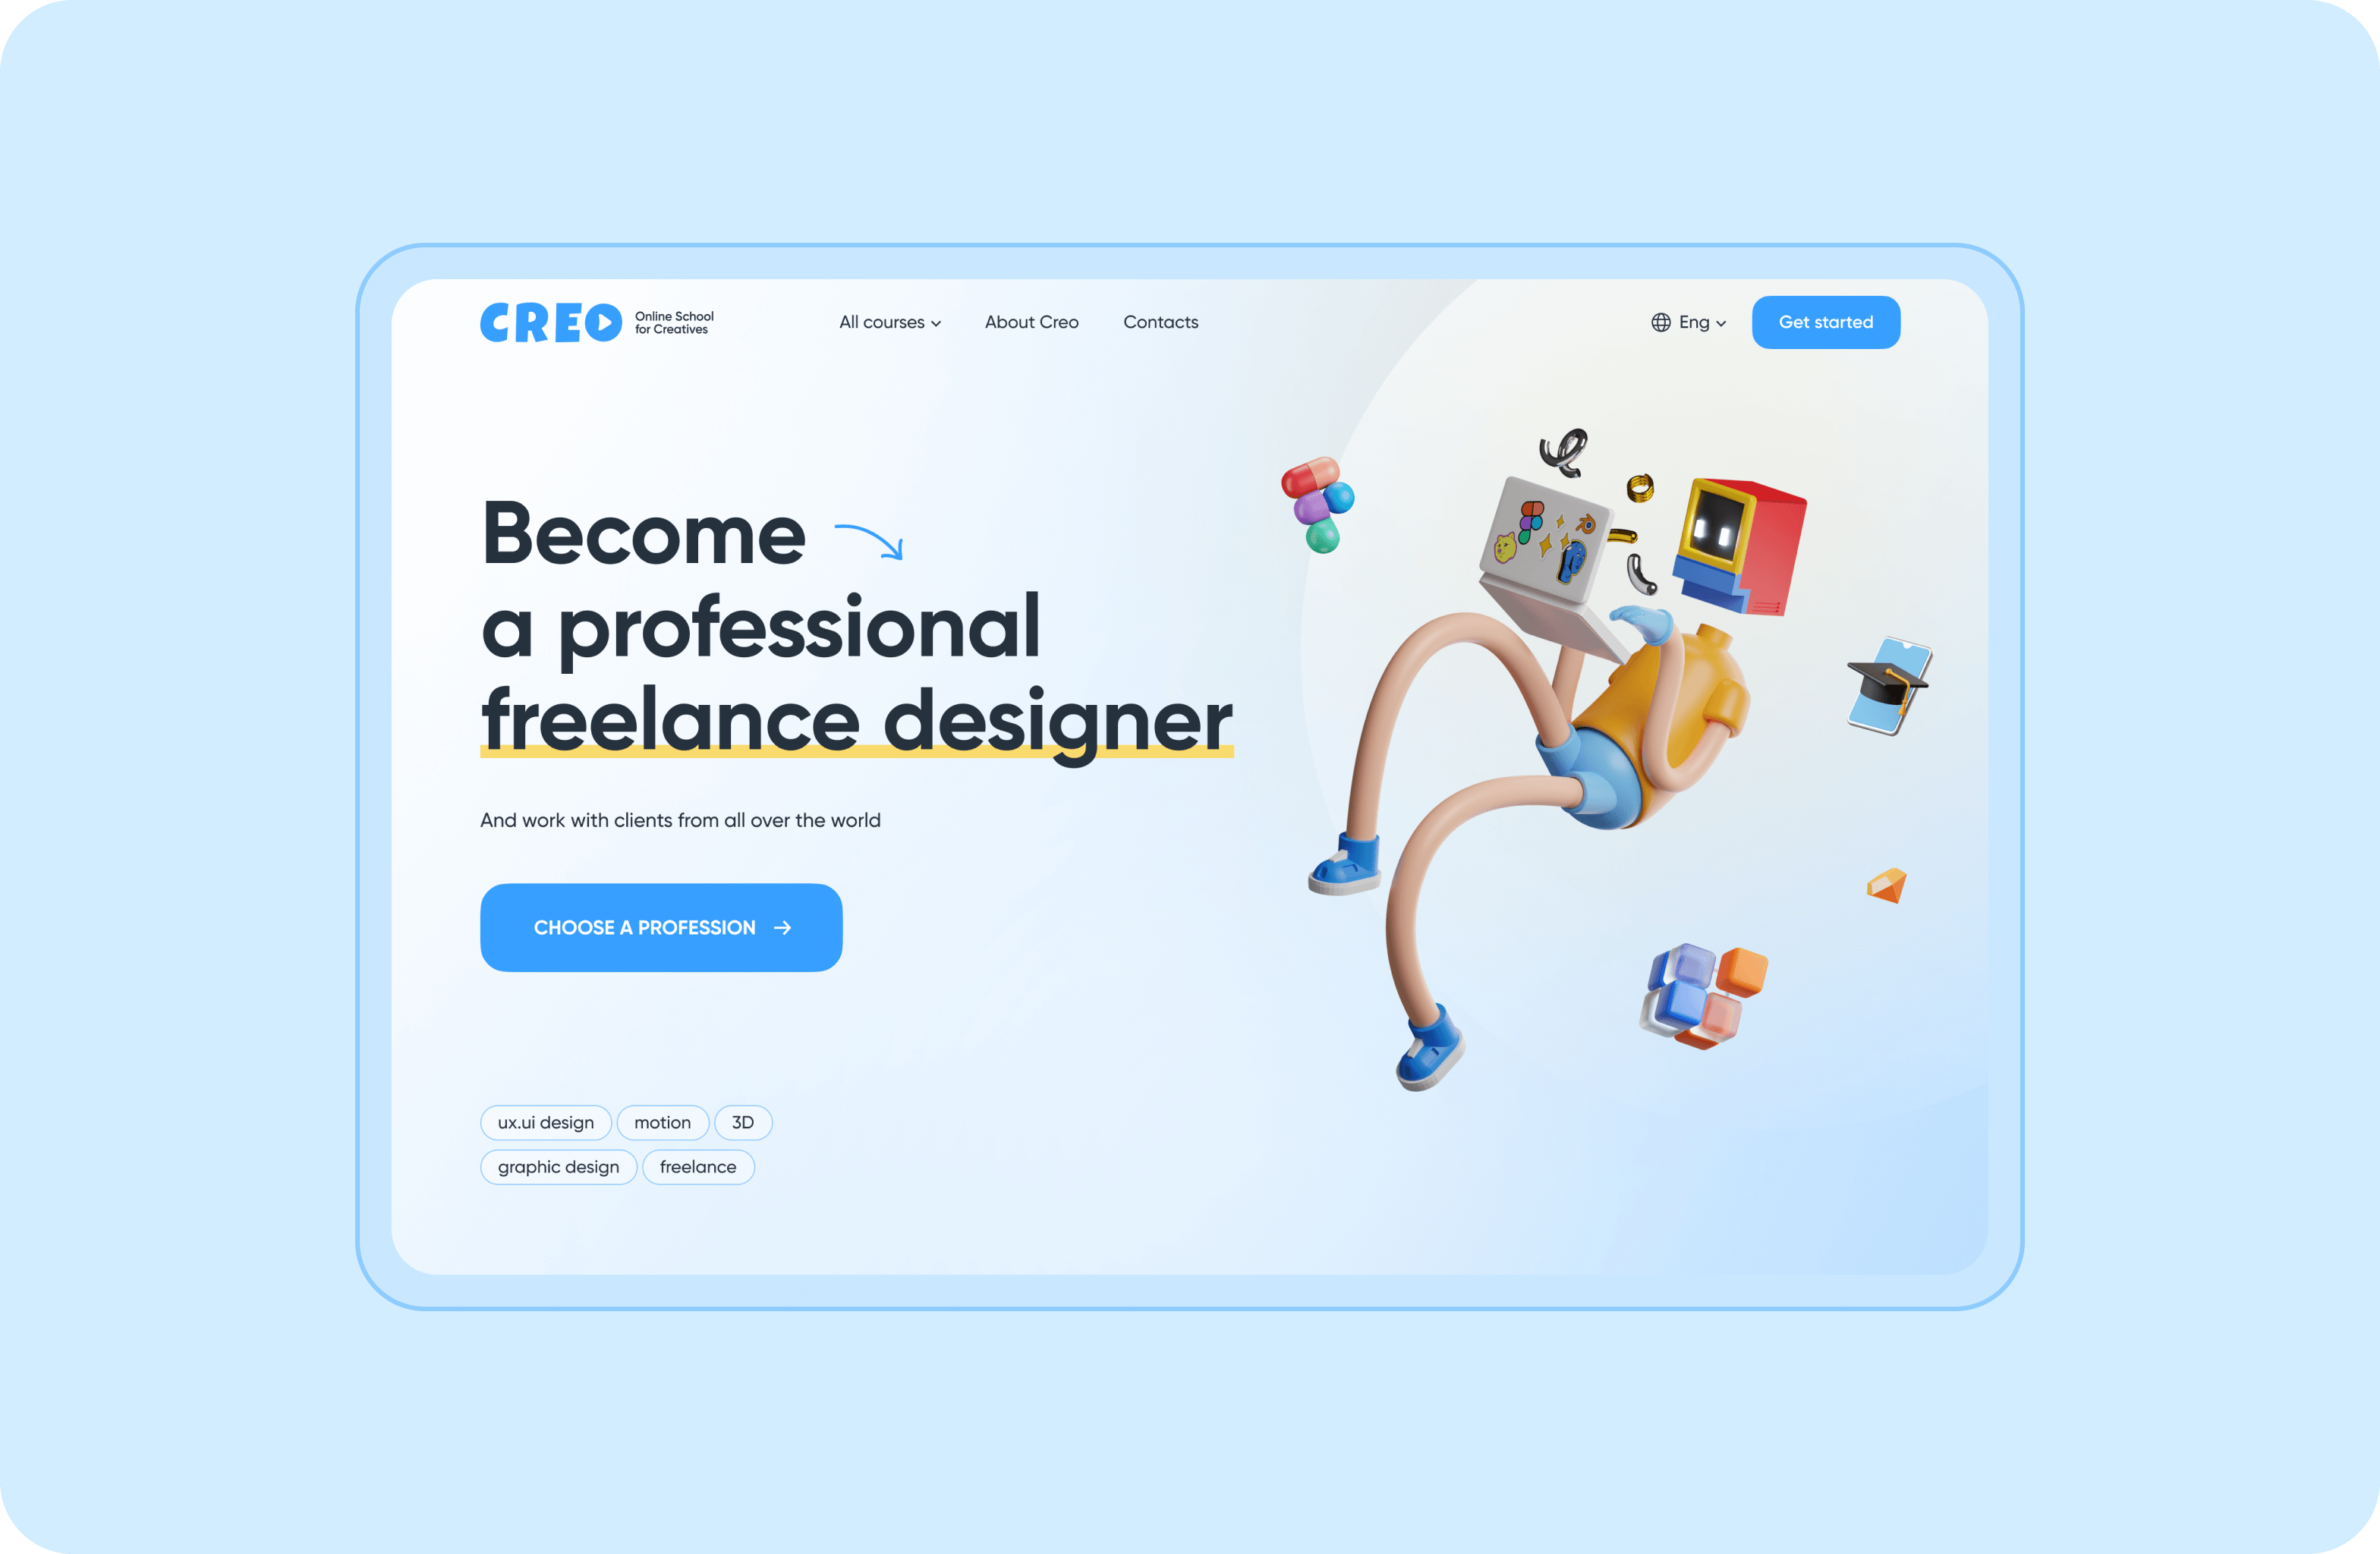 creo-case-website-home-block-desktop.png - Development of online education platform for designers Creo - goodface.agency